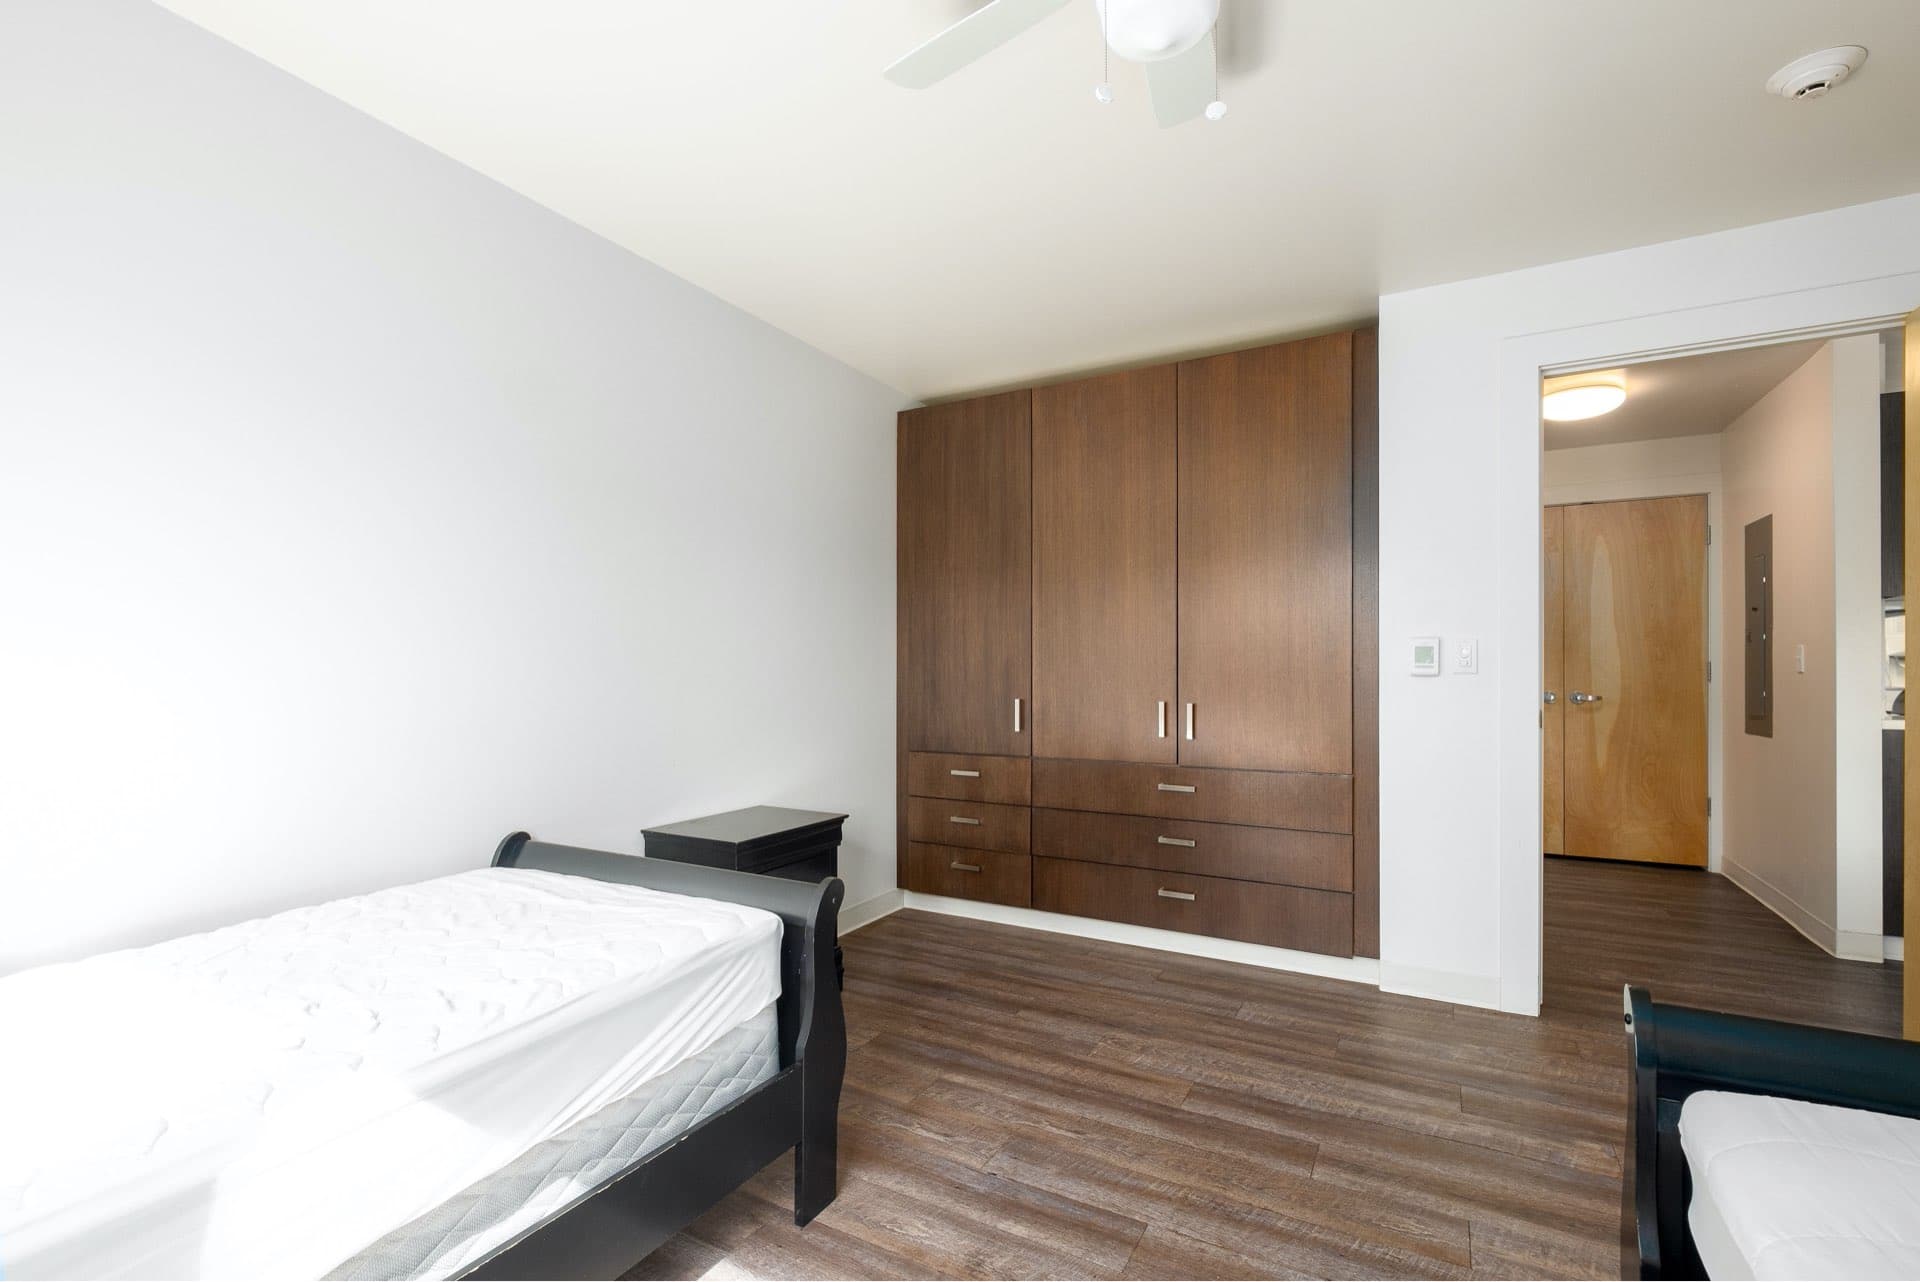 Bedroom, Empire Avenue Workforce Housing, architectural design by Elliott Workgroup